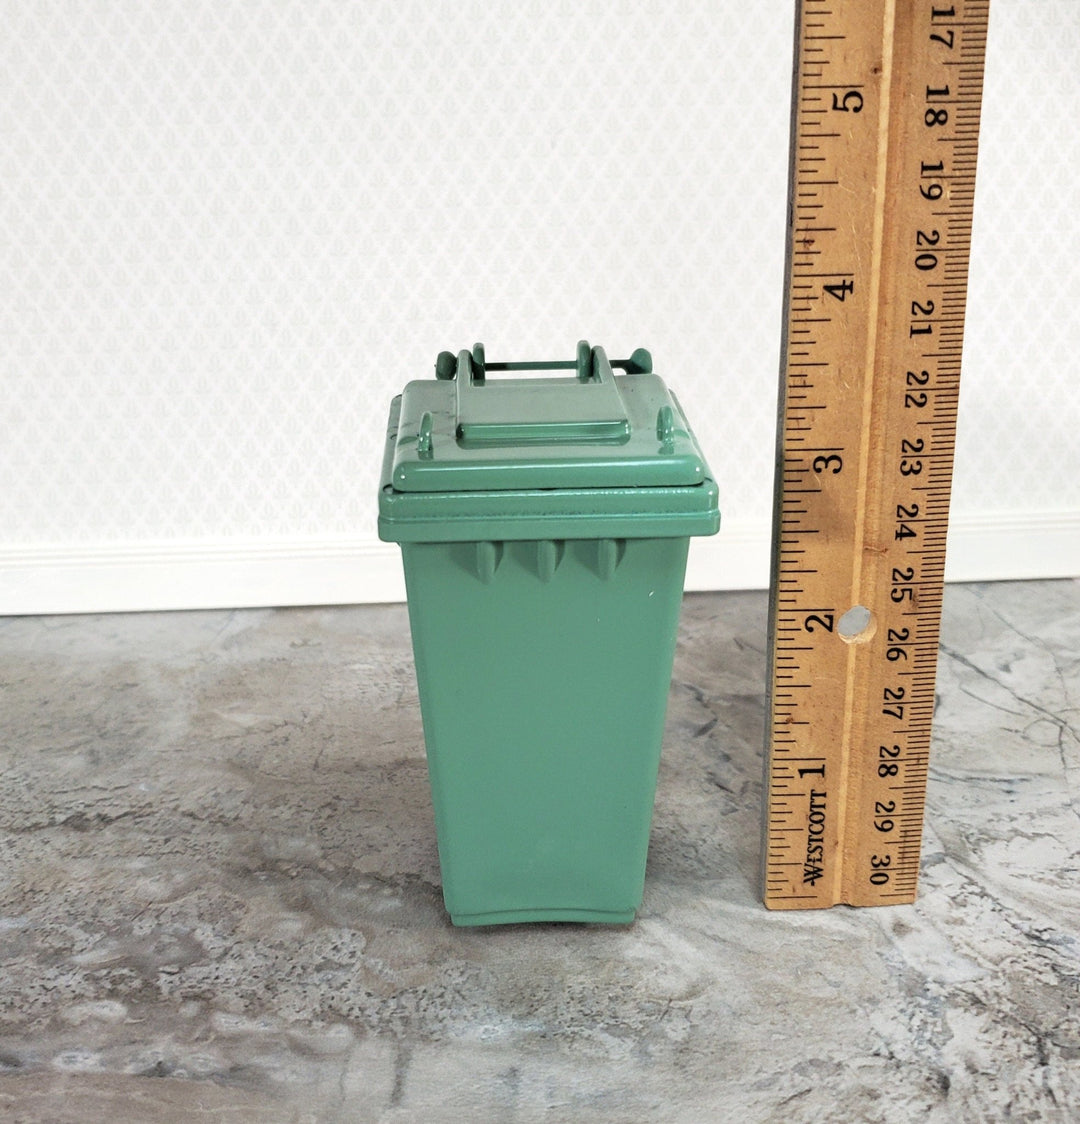 Dollhouse Green Garbage Can Wheelie Bin Opens 1:12 Scale Modern Miniatures - Miniature Crush